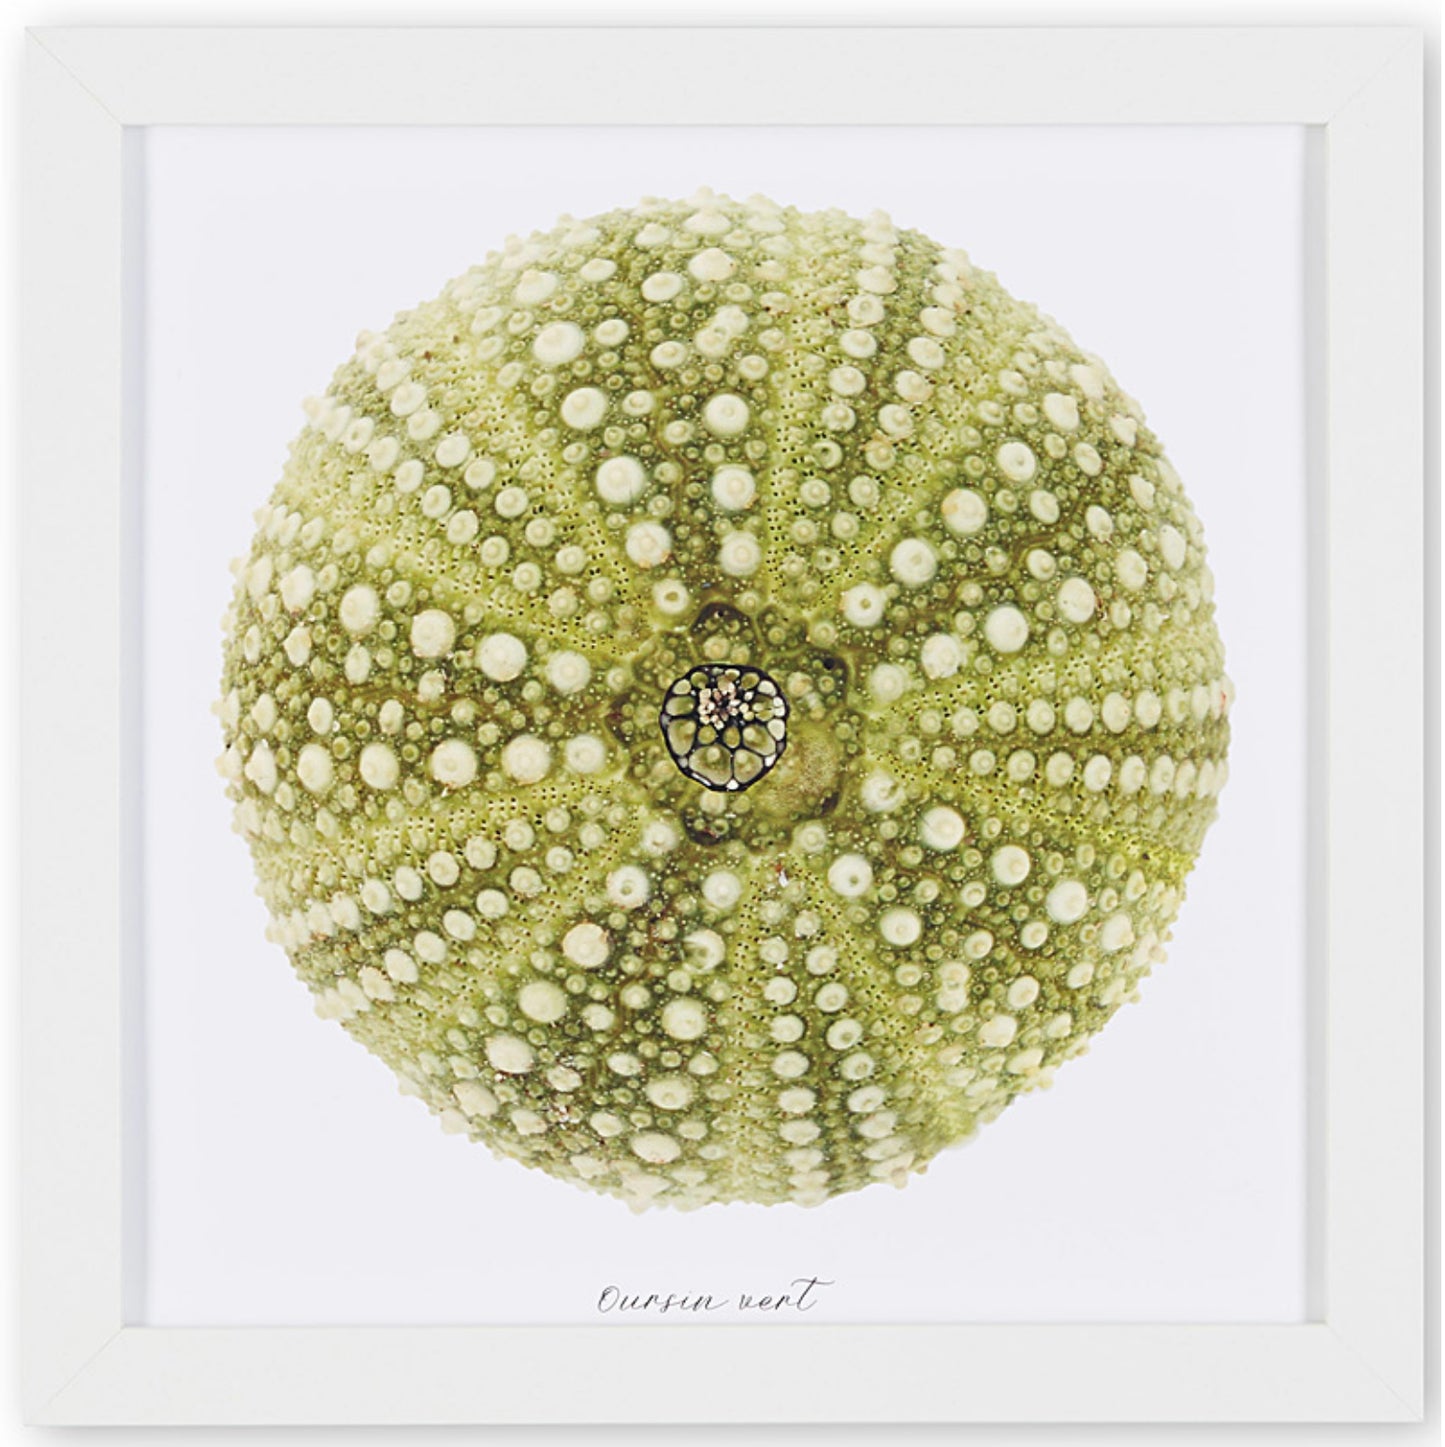 oursin vert, oursin, photographie oursin, green urchin, urchin photography, coastal art, art maritime, À Marée Basse